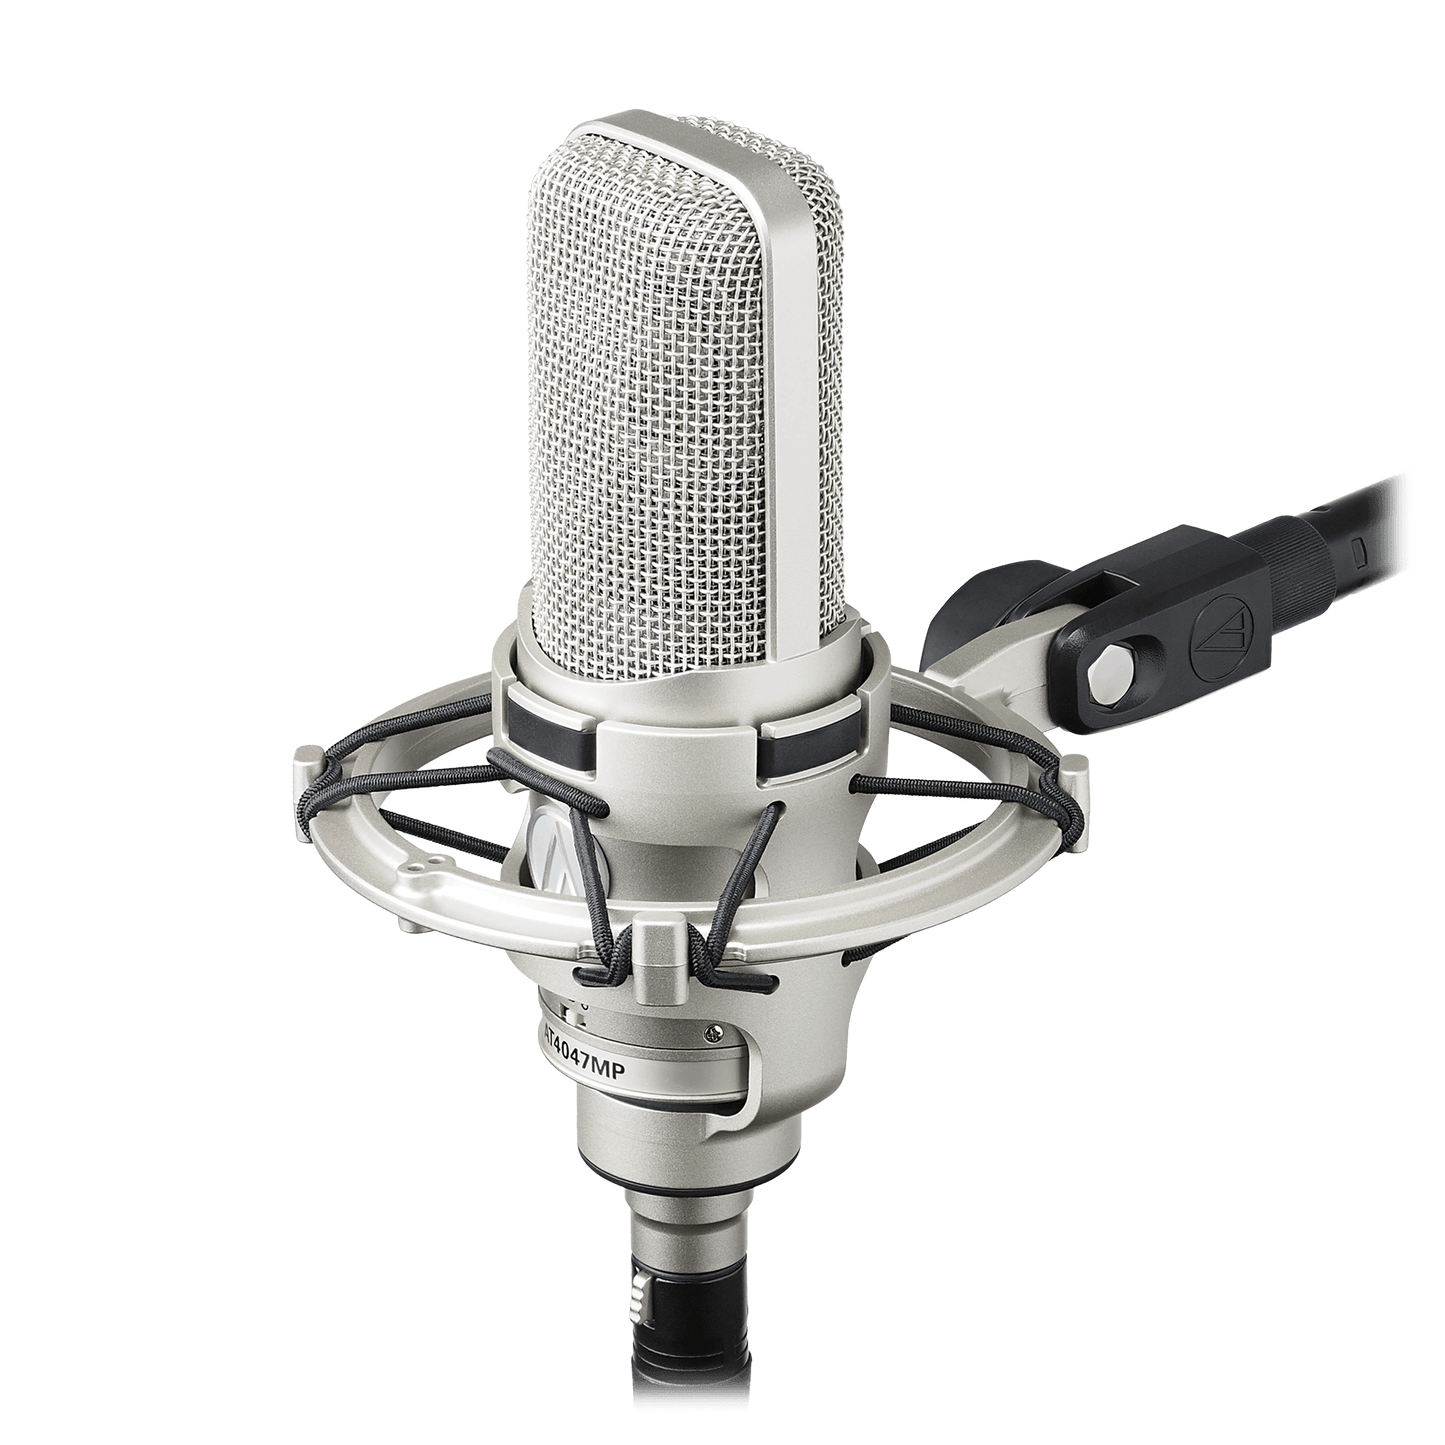 Audio Technica AT4047MP Multipattern Condenser Microphone